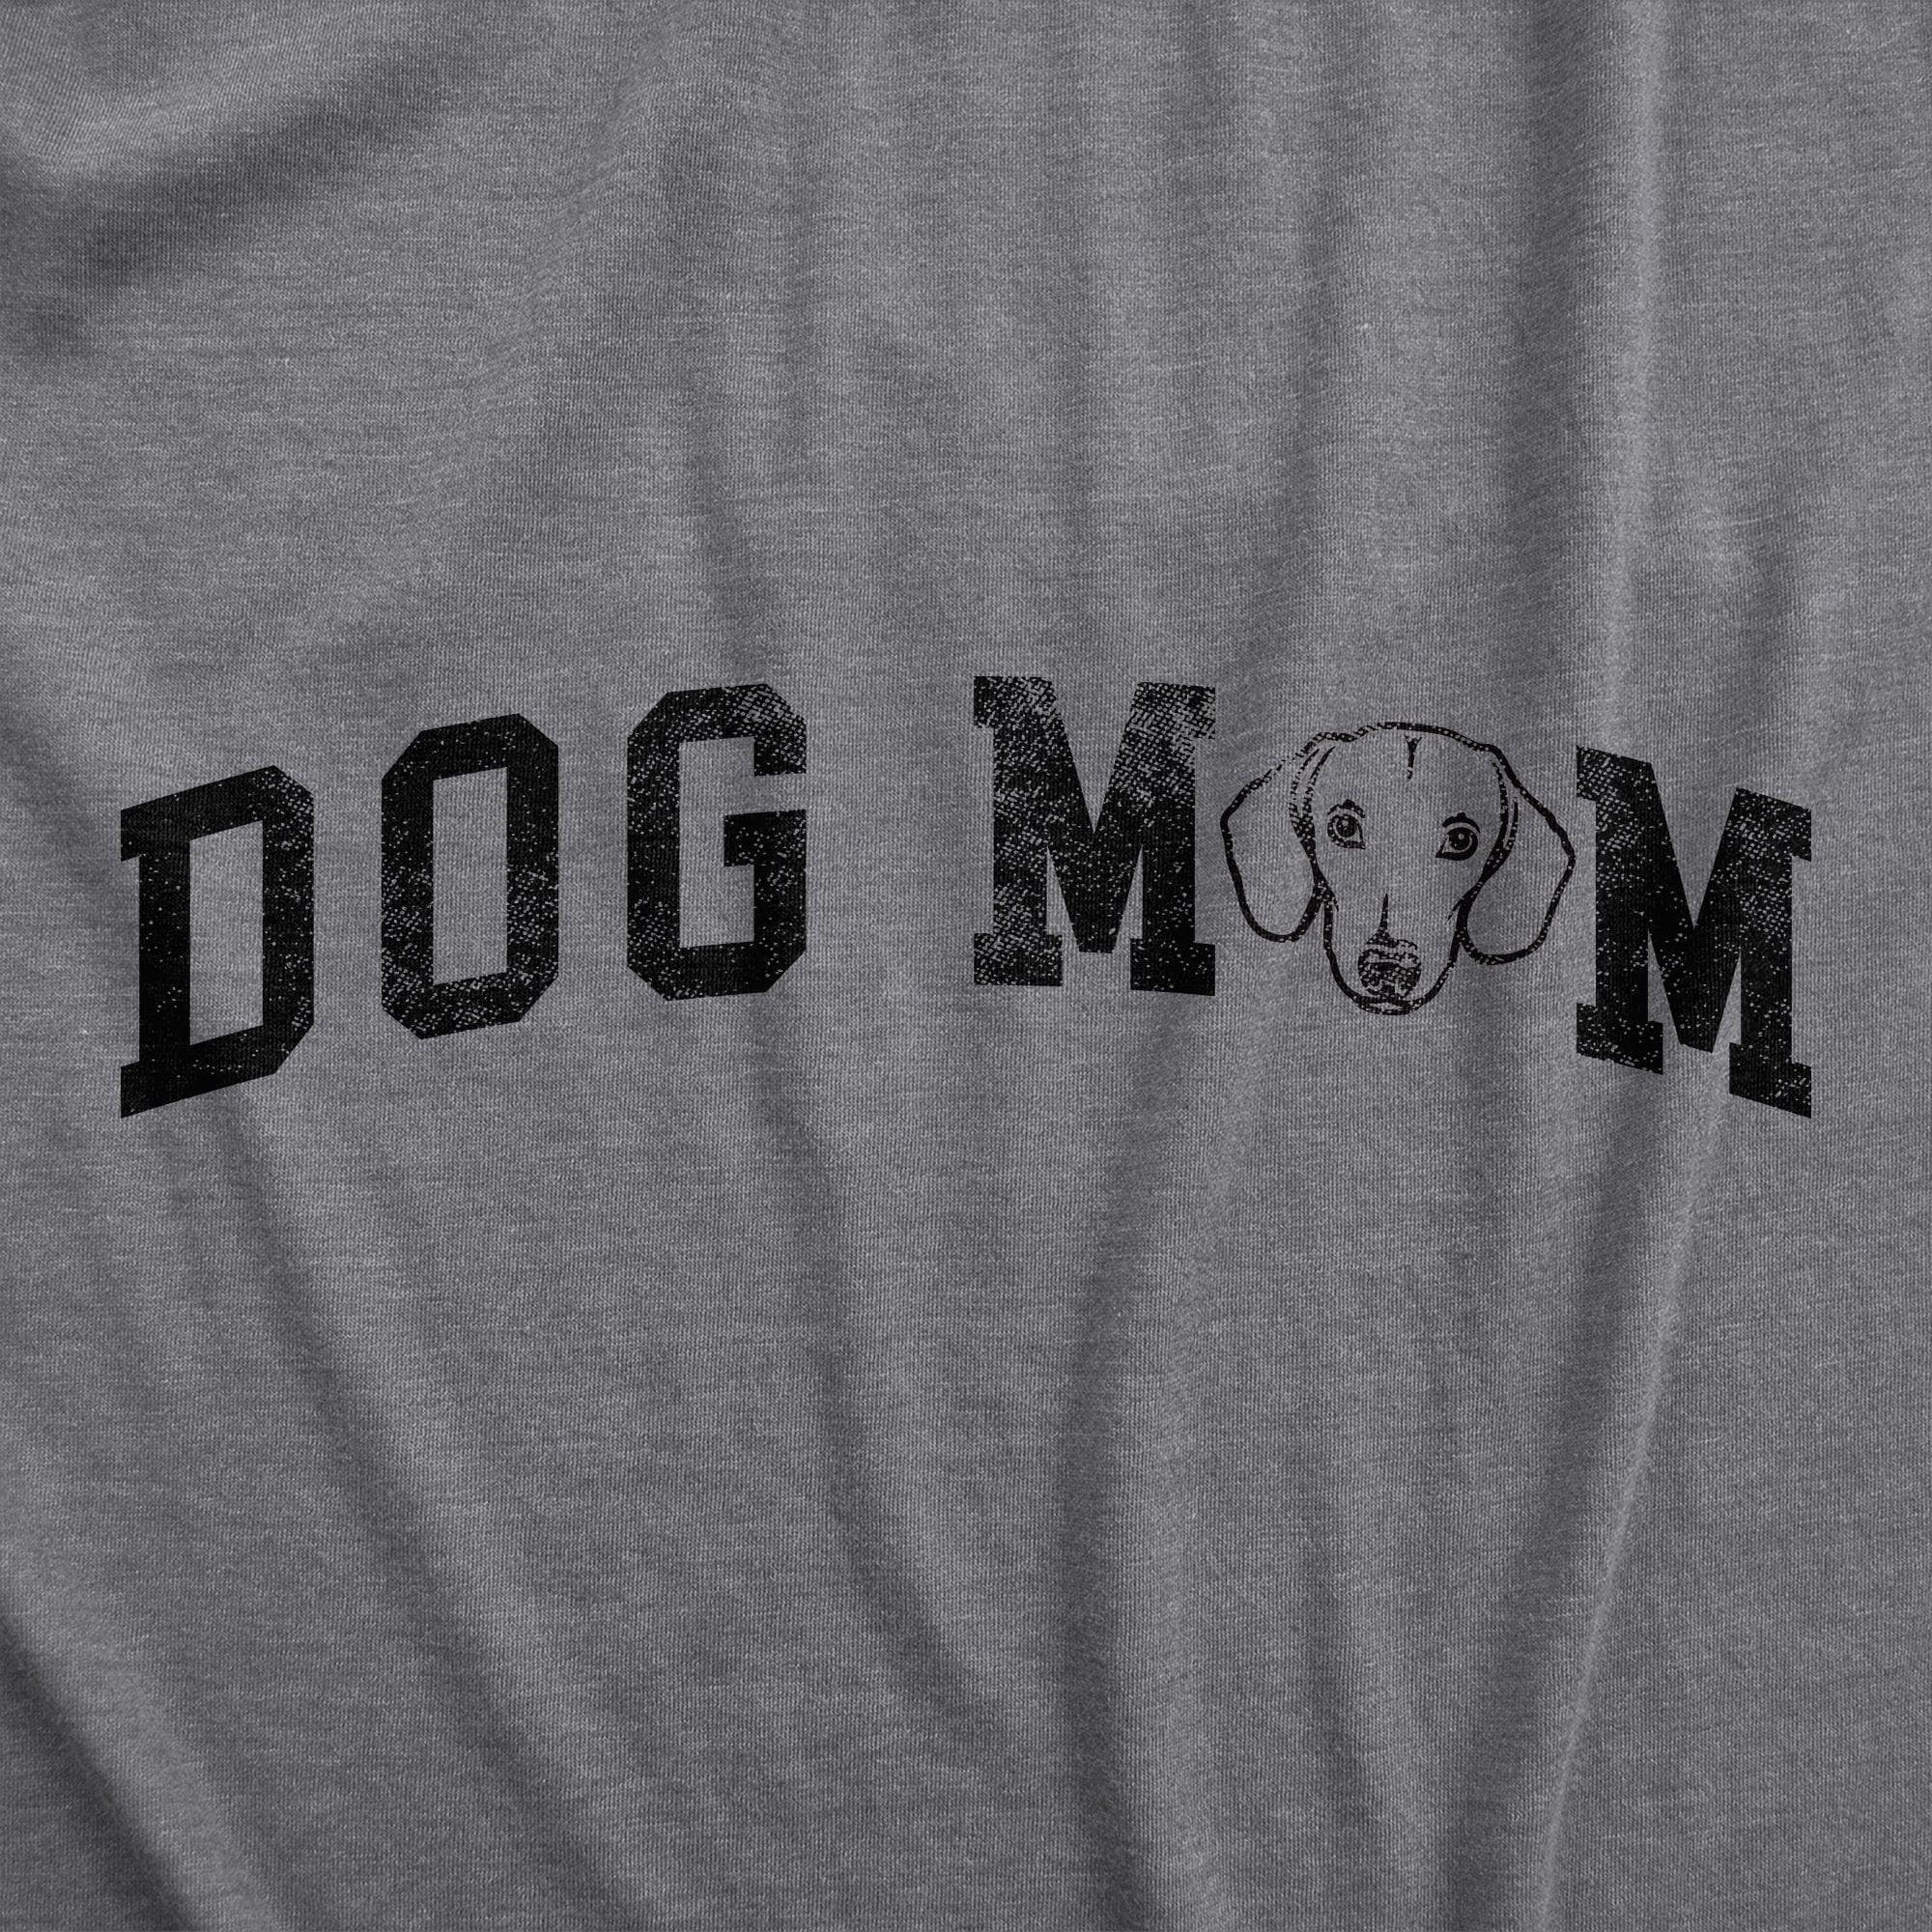 Dog Mom Dachshund Women's Tshirt  -  Crazy Dog T-Shirts